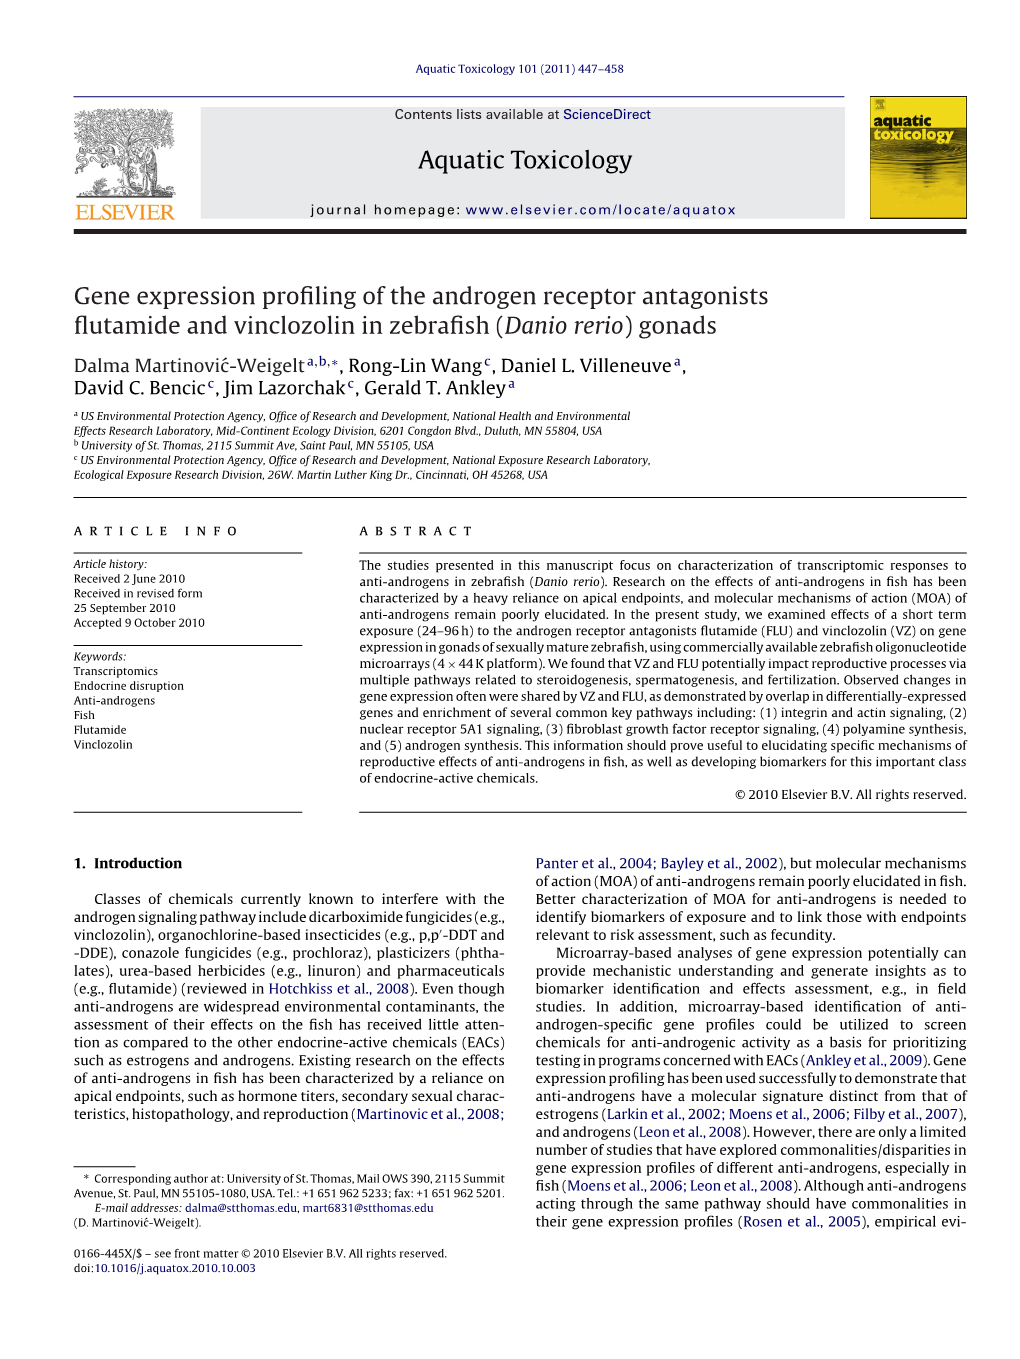 Gene Expression Profiling of the Androgen Receptor Antagonists Flutamide and Vinclozolin in Zebrafish (Danio Rerio) Gonads